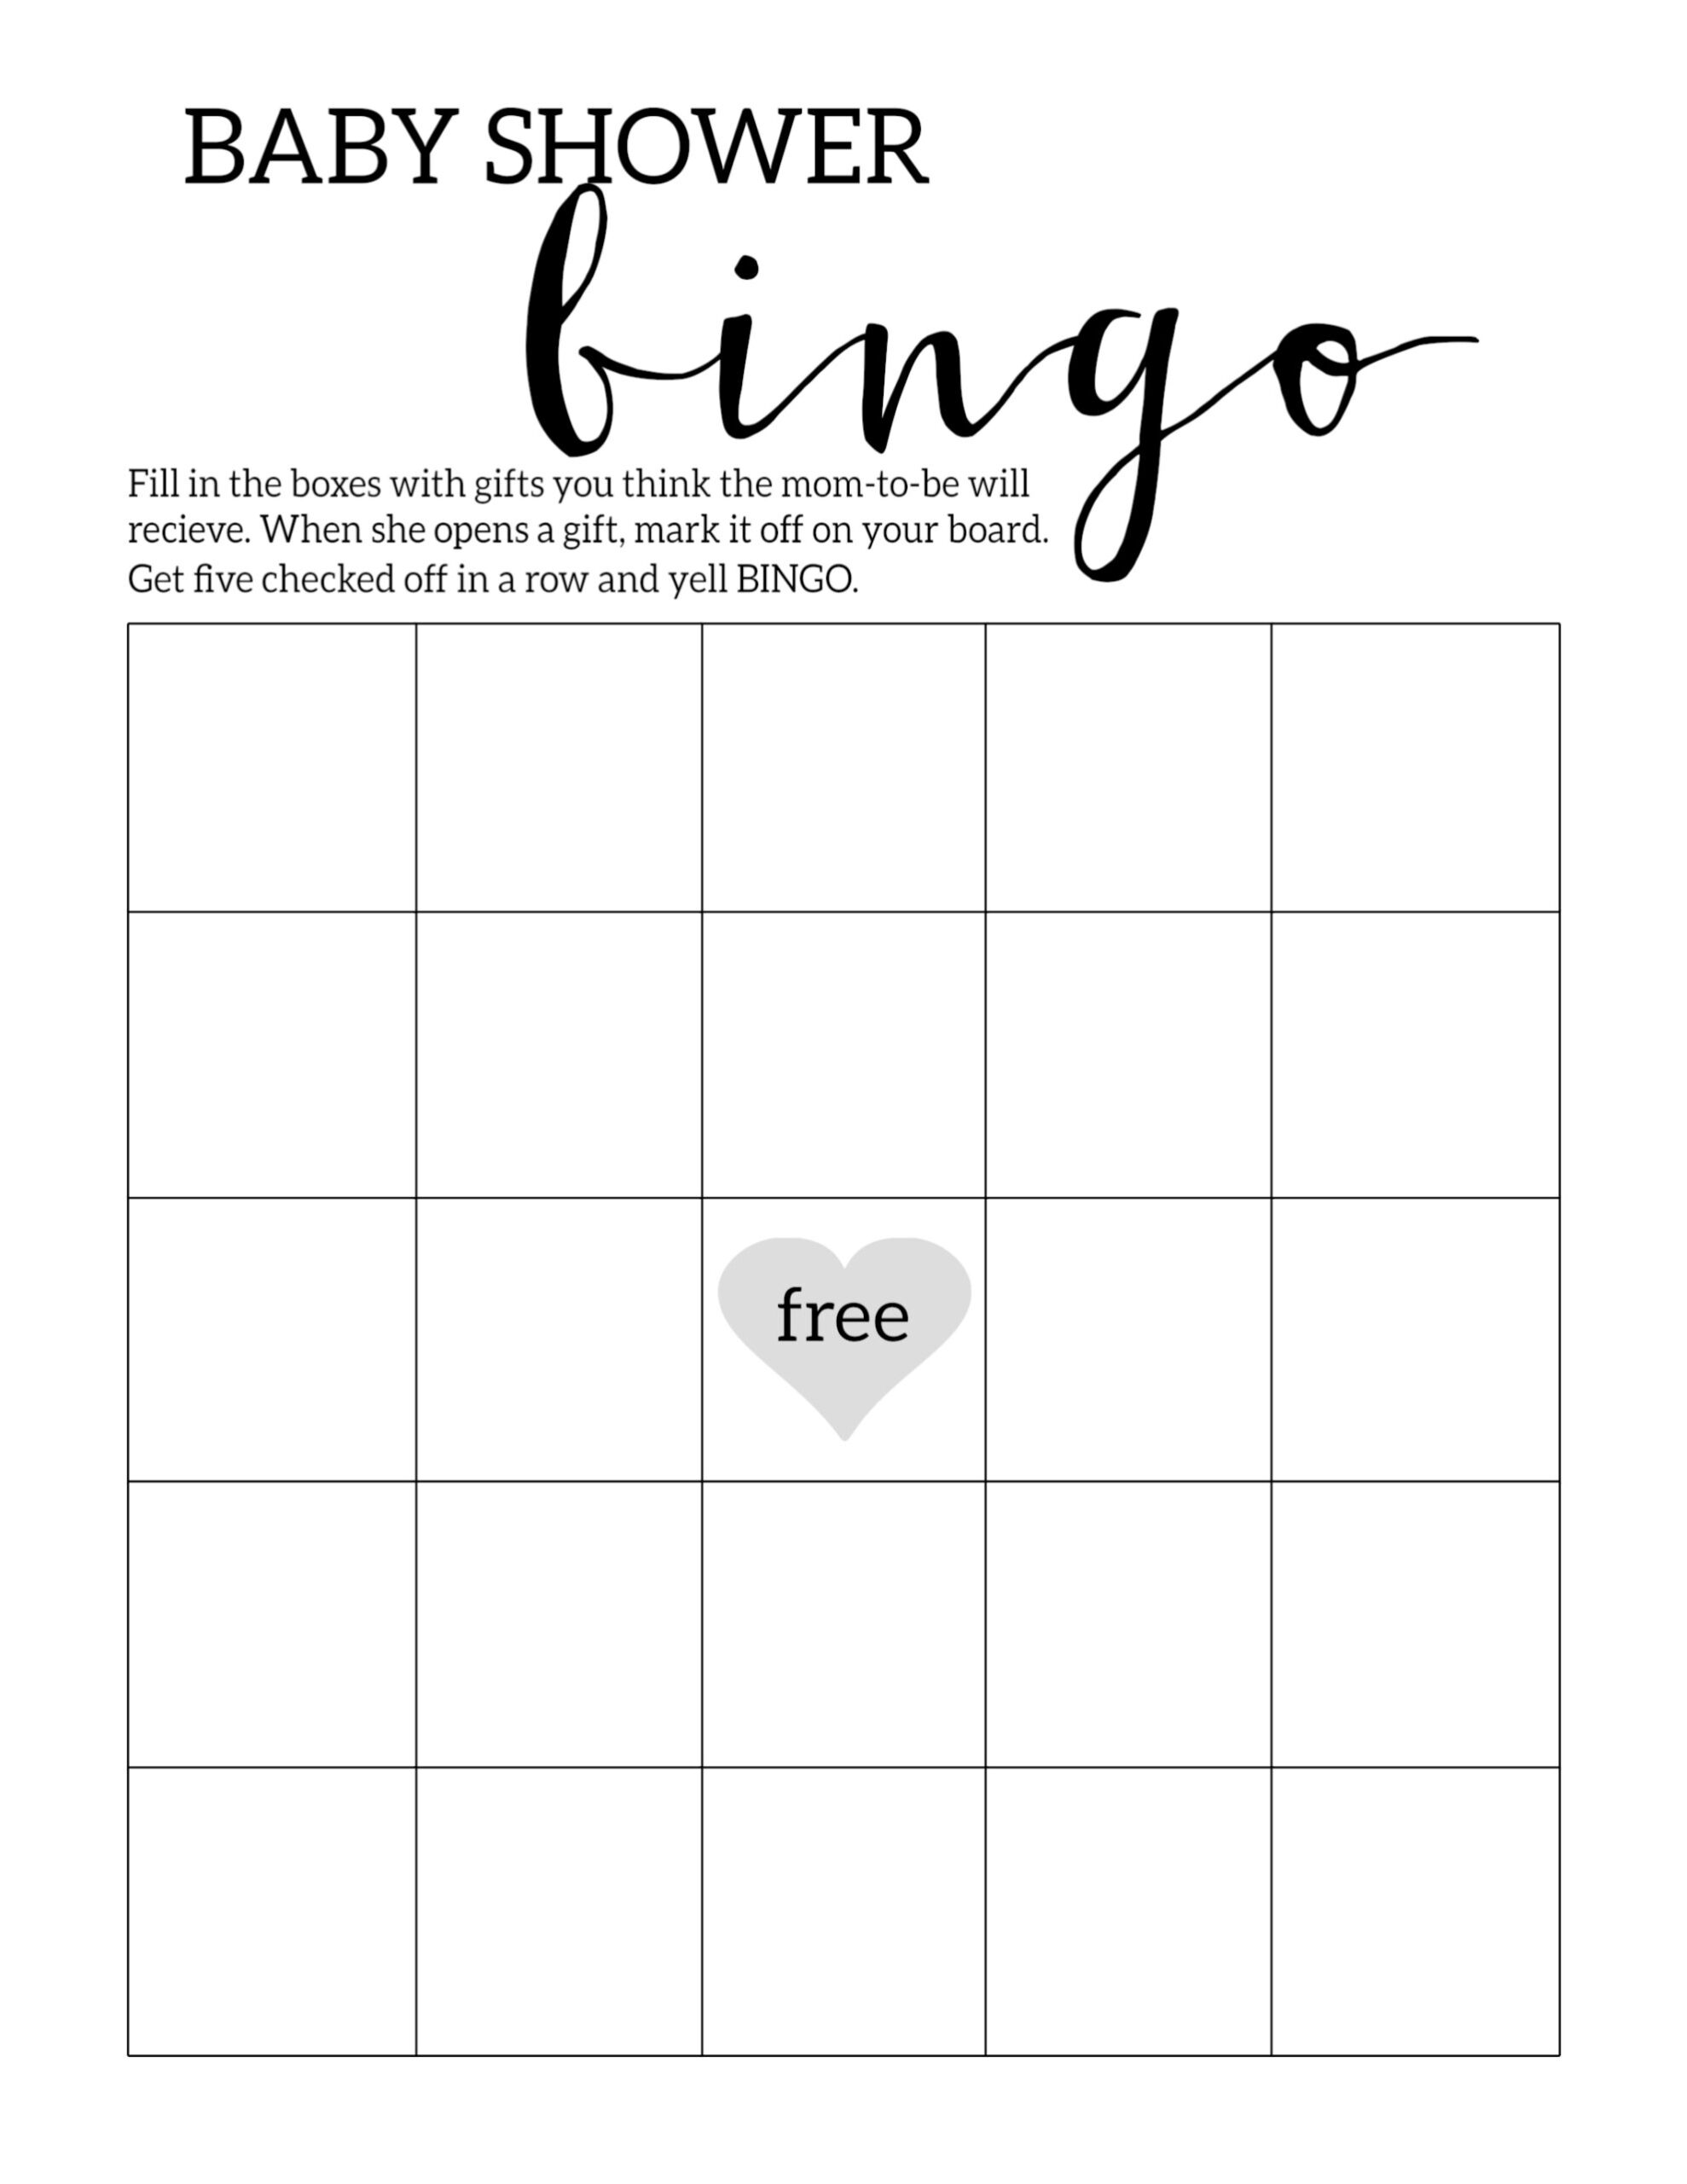 Baby Shower Bingo Printable Cards Template - Paper Trail Design - Free Printable Baby Shower Bingo 50 Cards